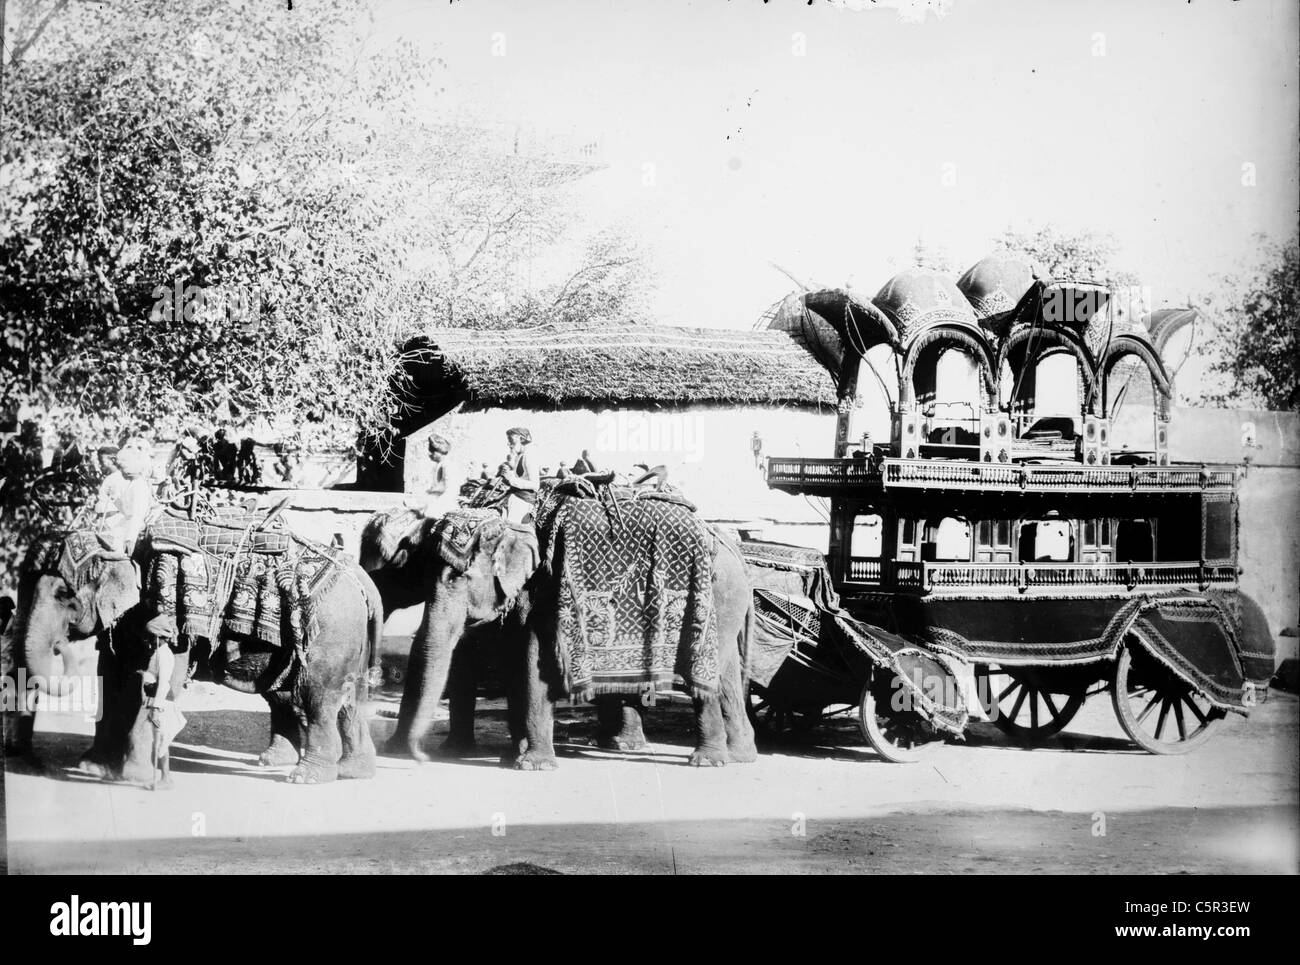 Four elephants pulling carriage, India  Stock Photo